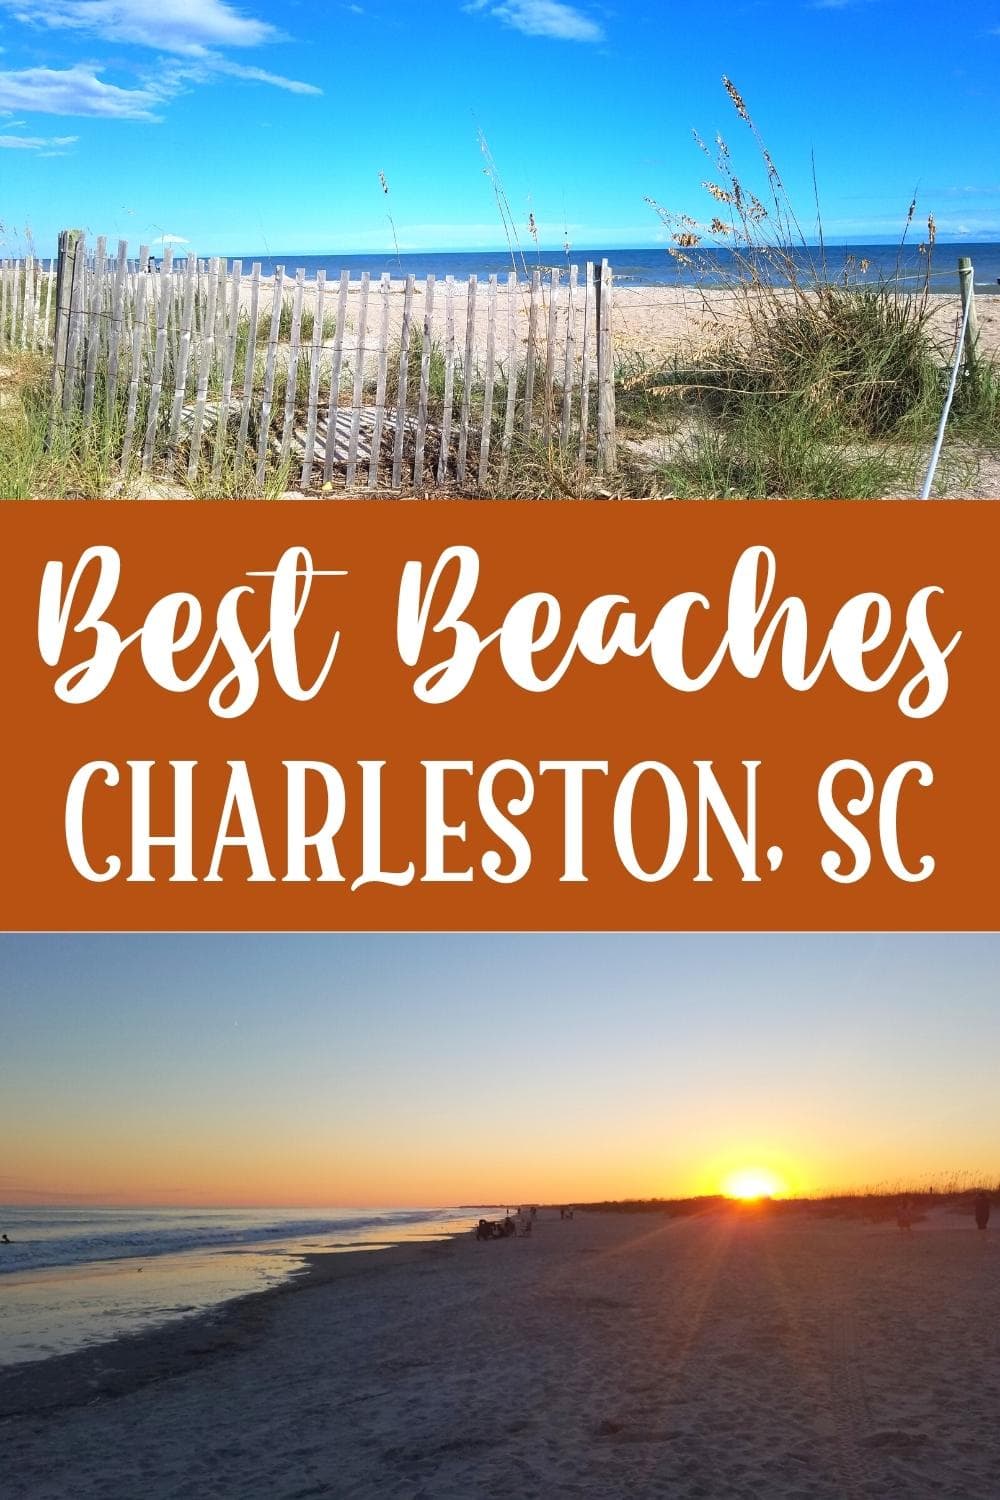 9 Best Beaches in Charleston, SC